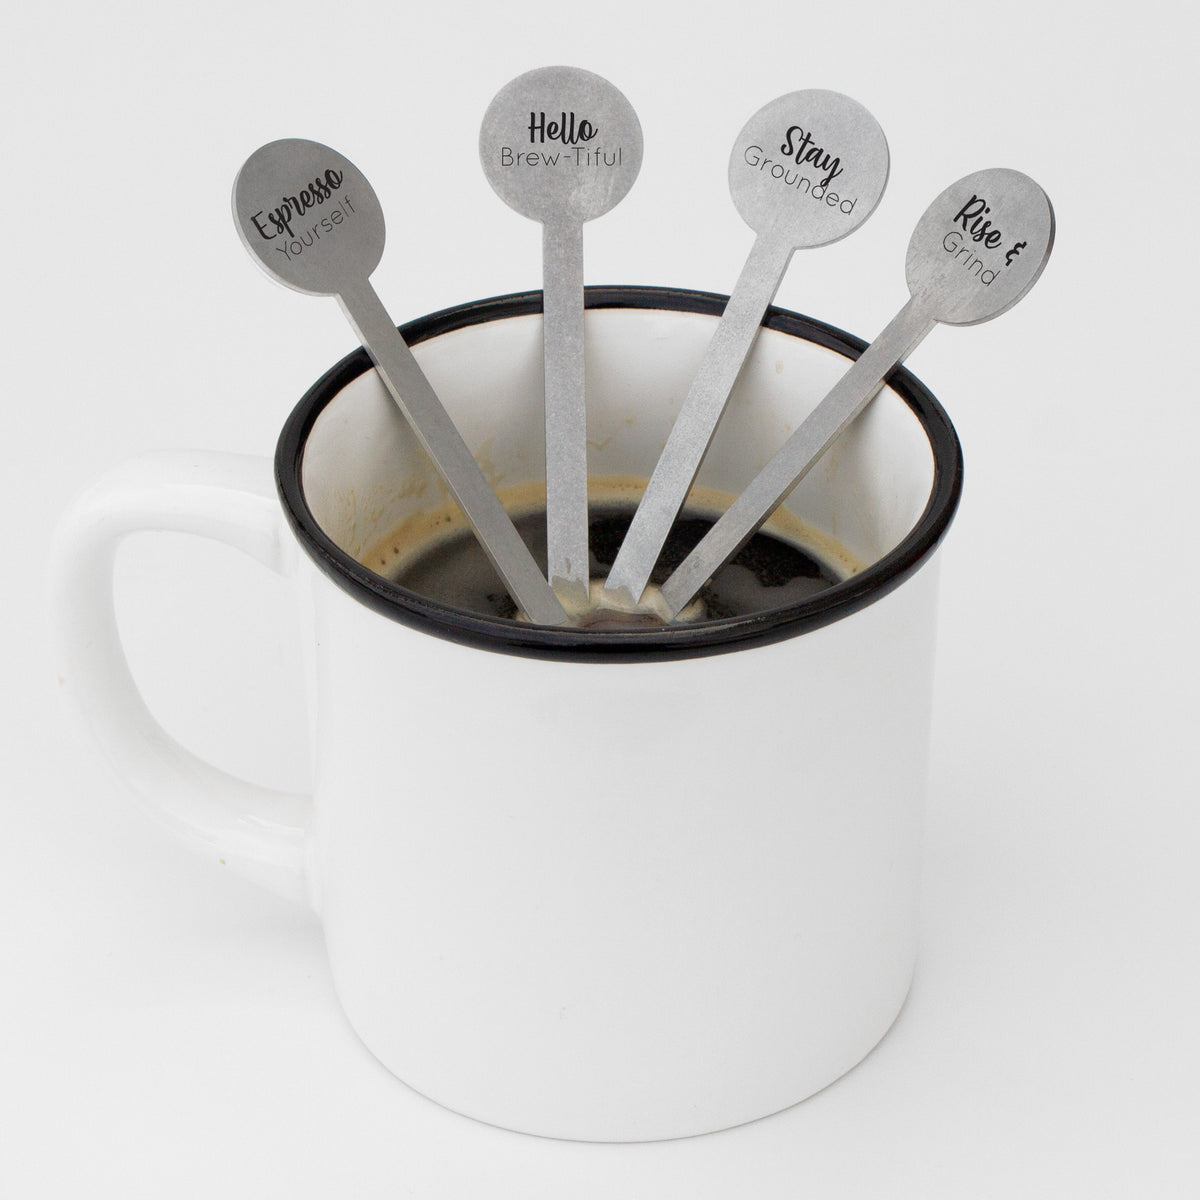 Coffee Pun Stirrers, Positive Coffee Stir Sticks